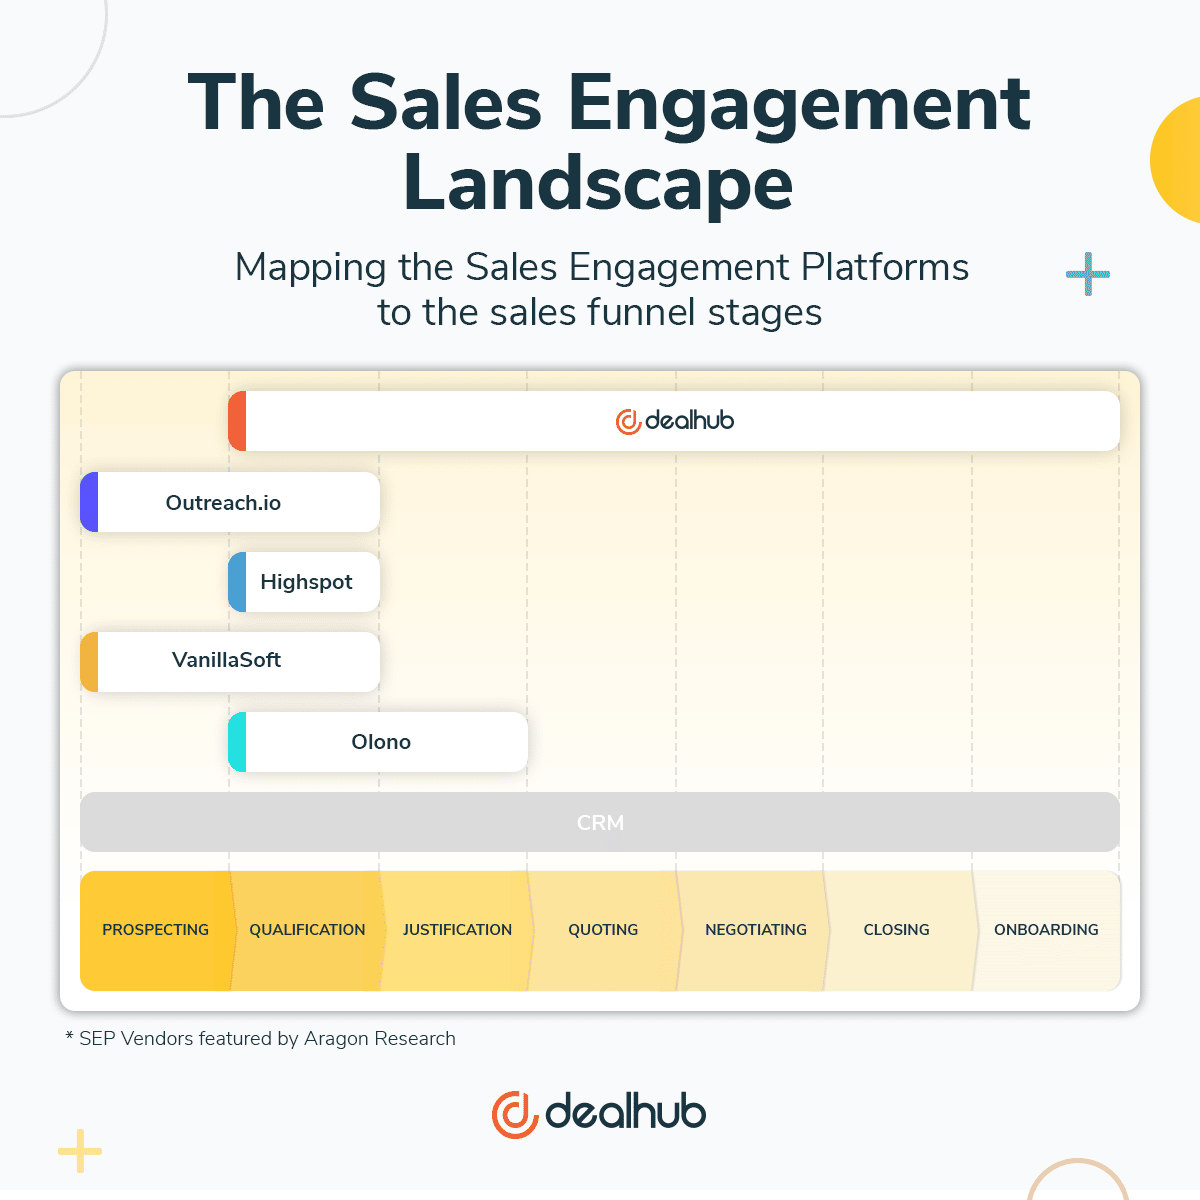 sales engagement platforms for sales funnel stages